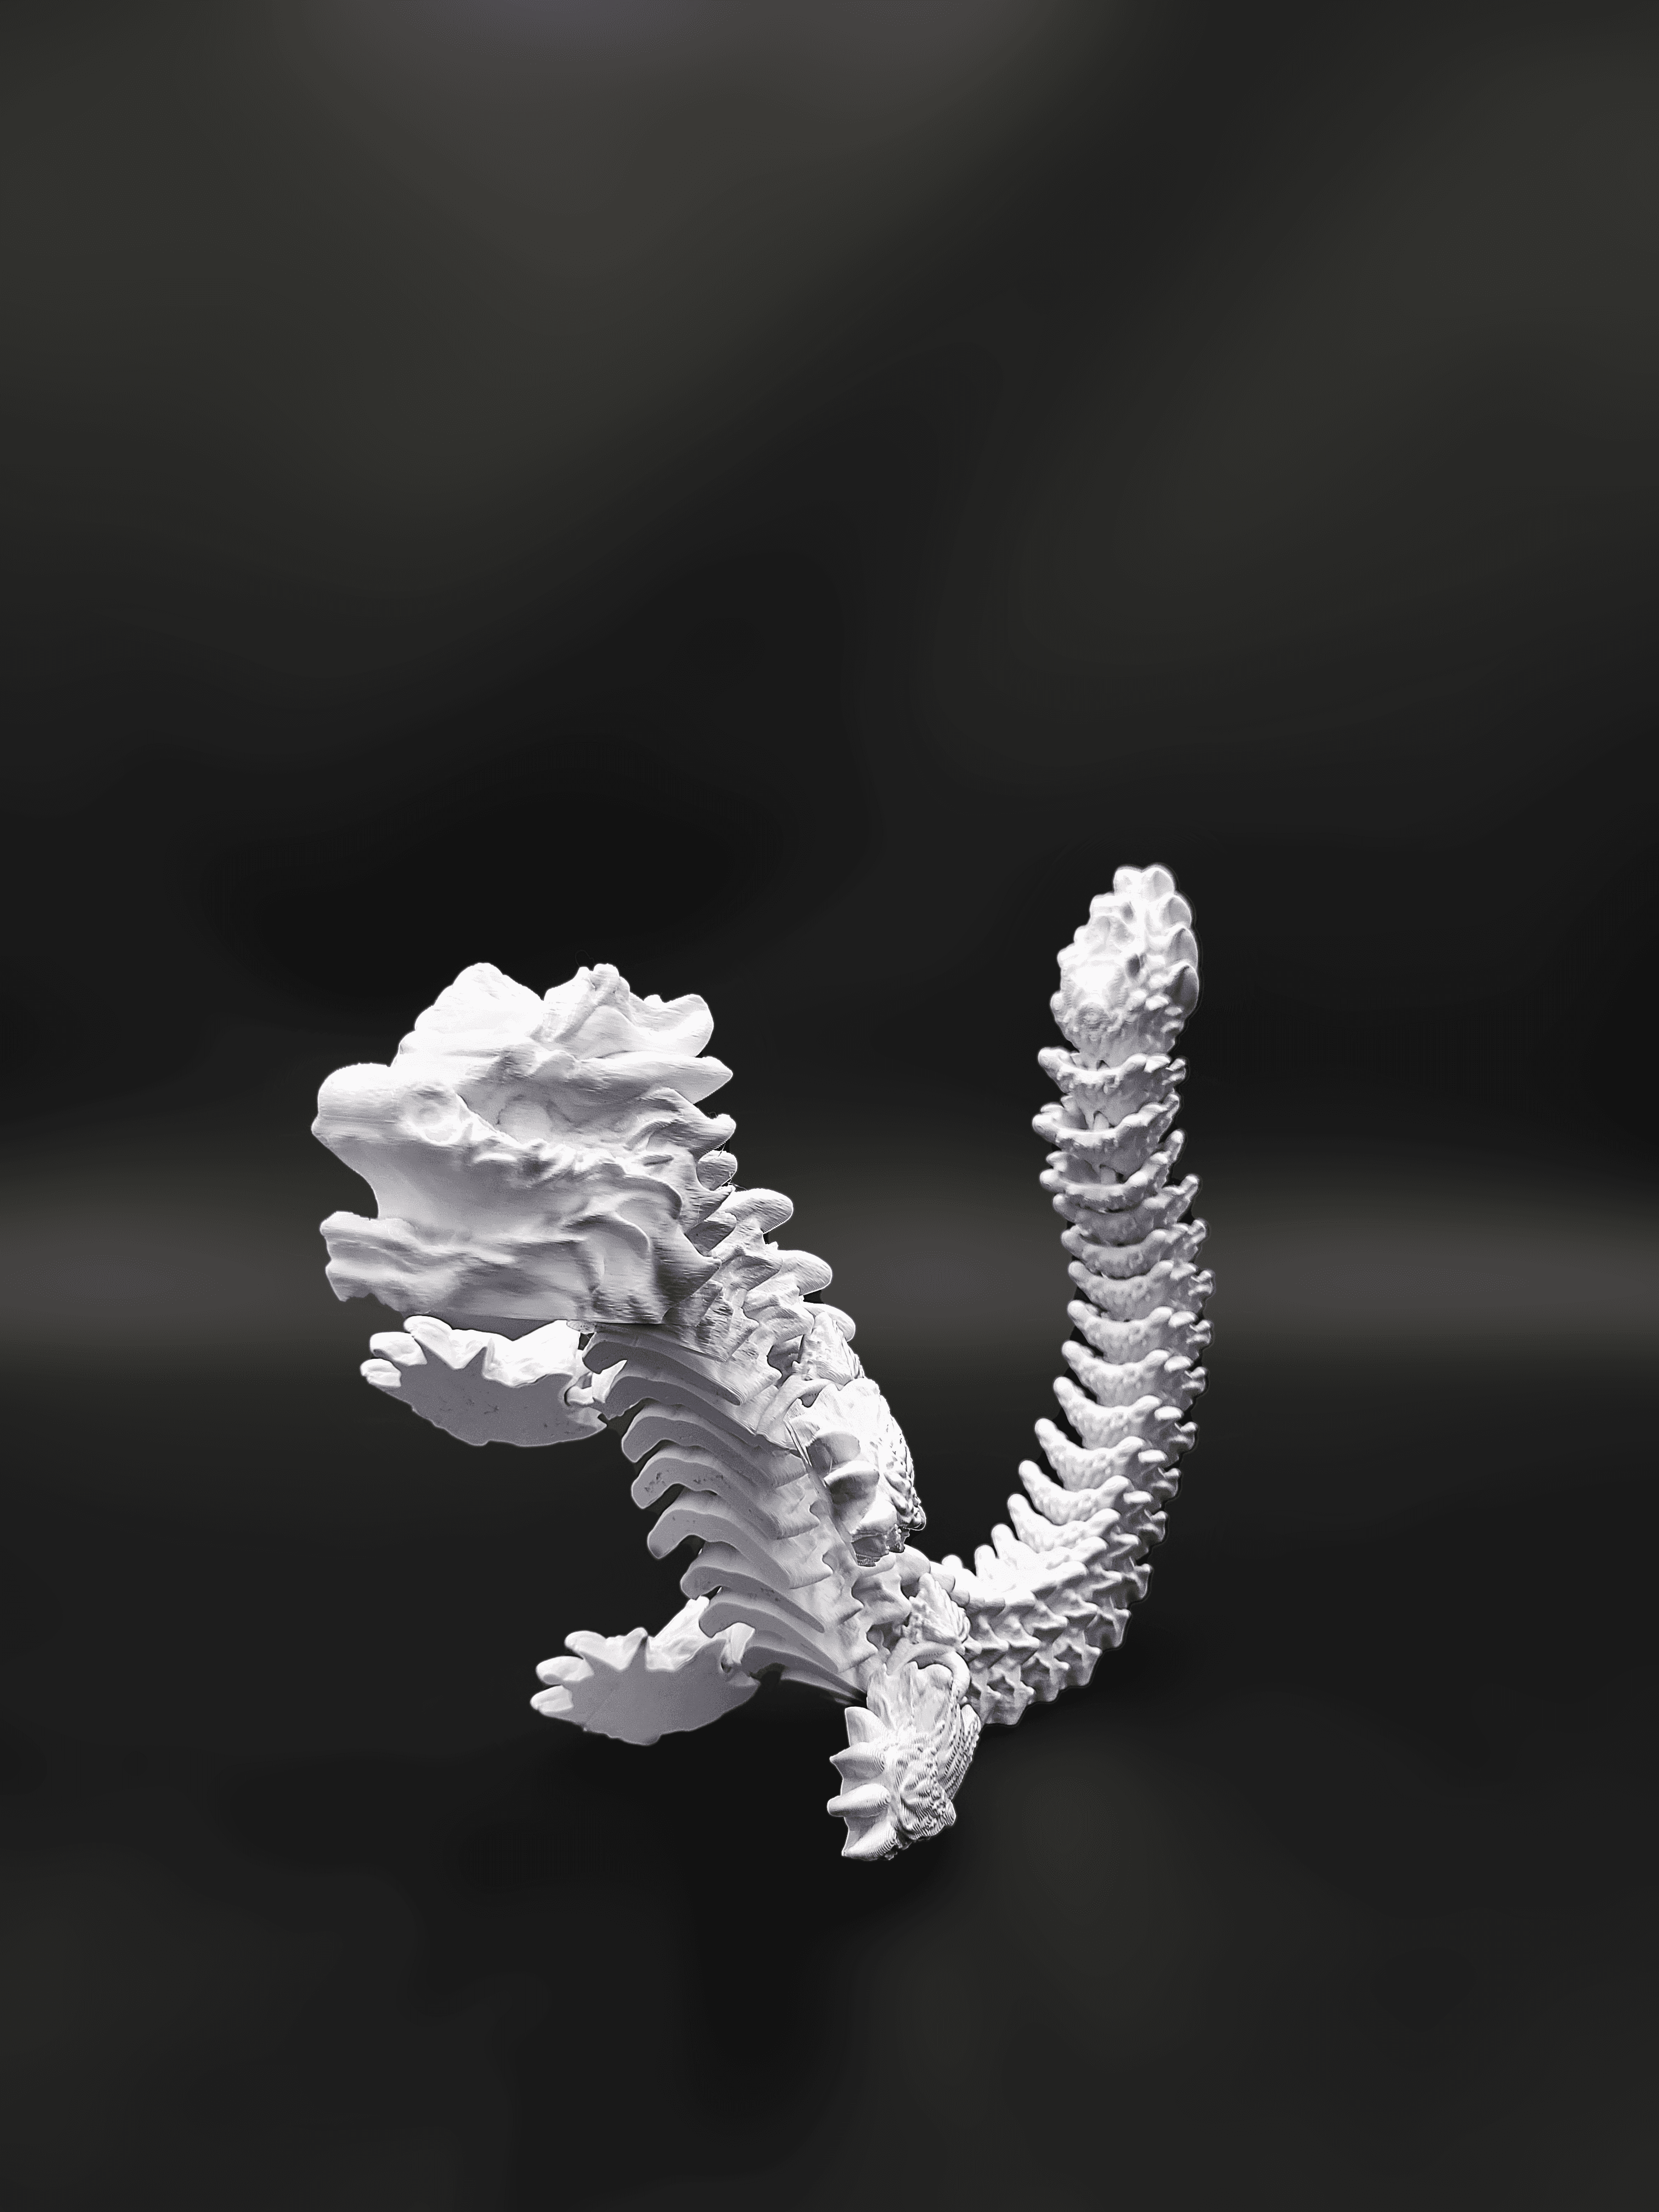 Snowstorm, Winter Dragon - Articulated Dragon Snap-Flex Fidget (Loose Joints) 3d model